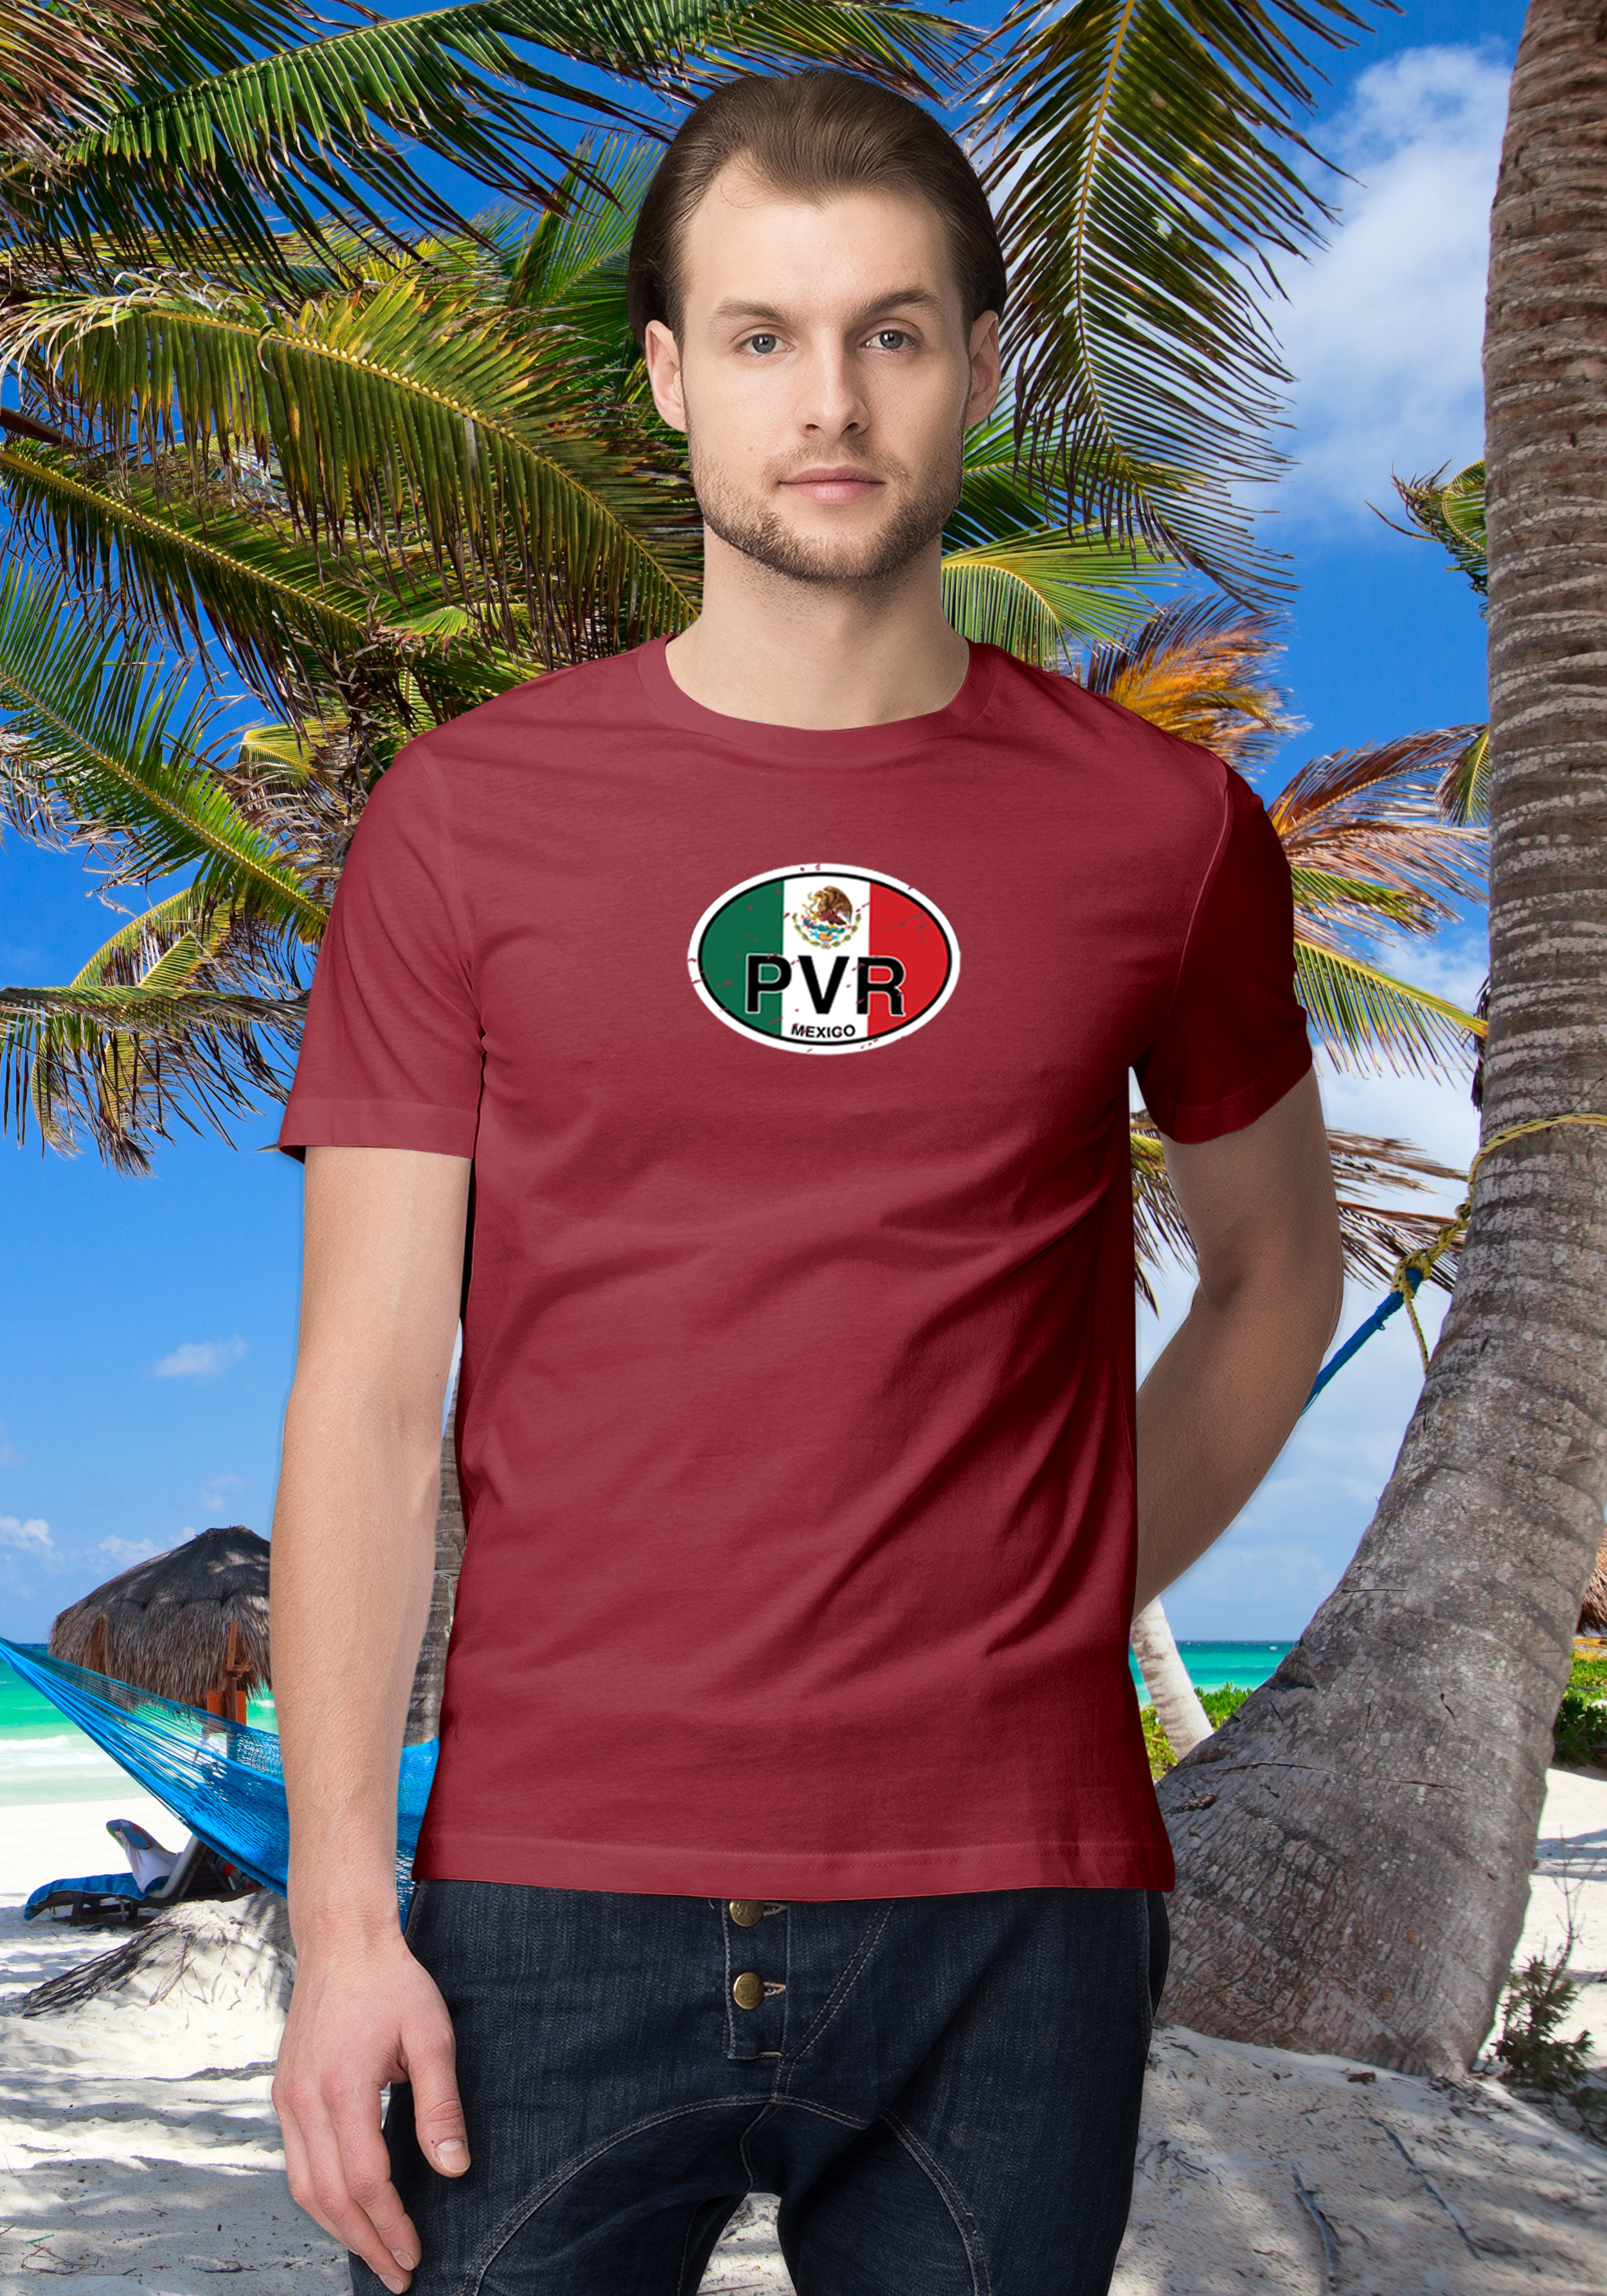 Puerto Vallarta Men's Flag T-Shirt Souvenirs - My Destination Location